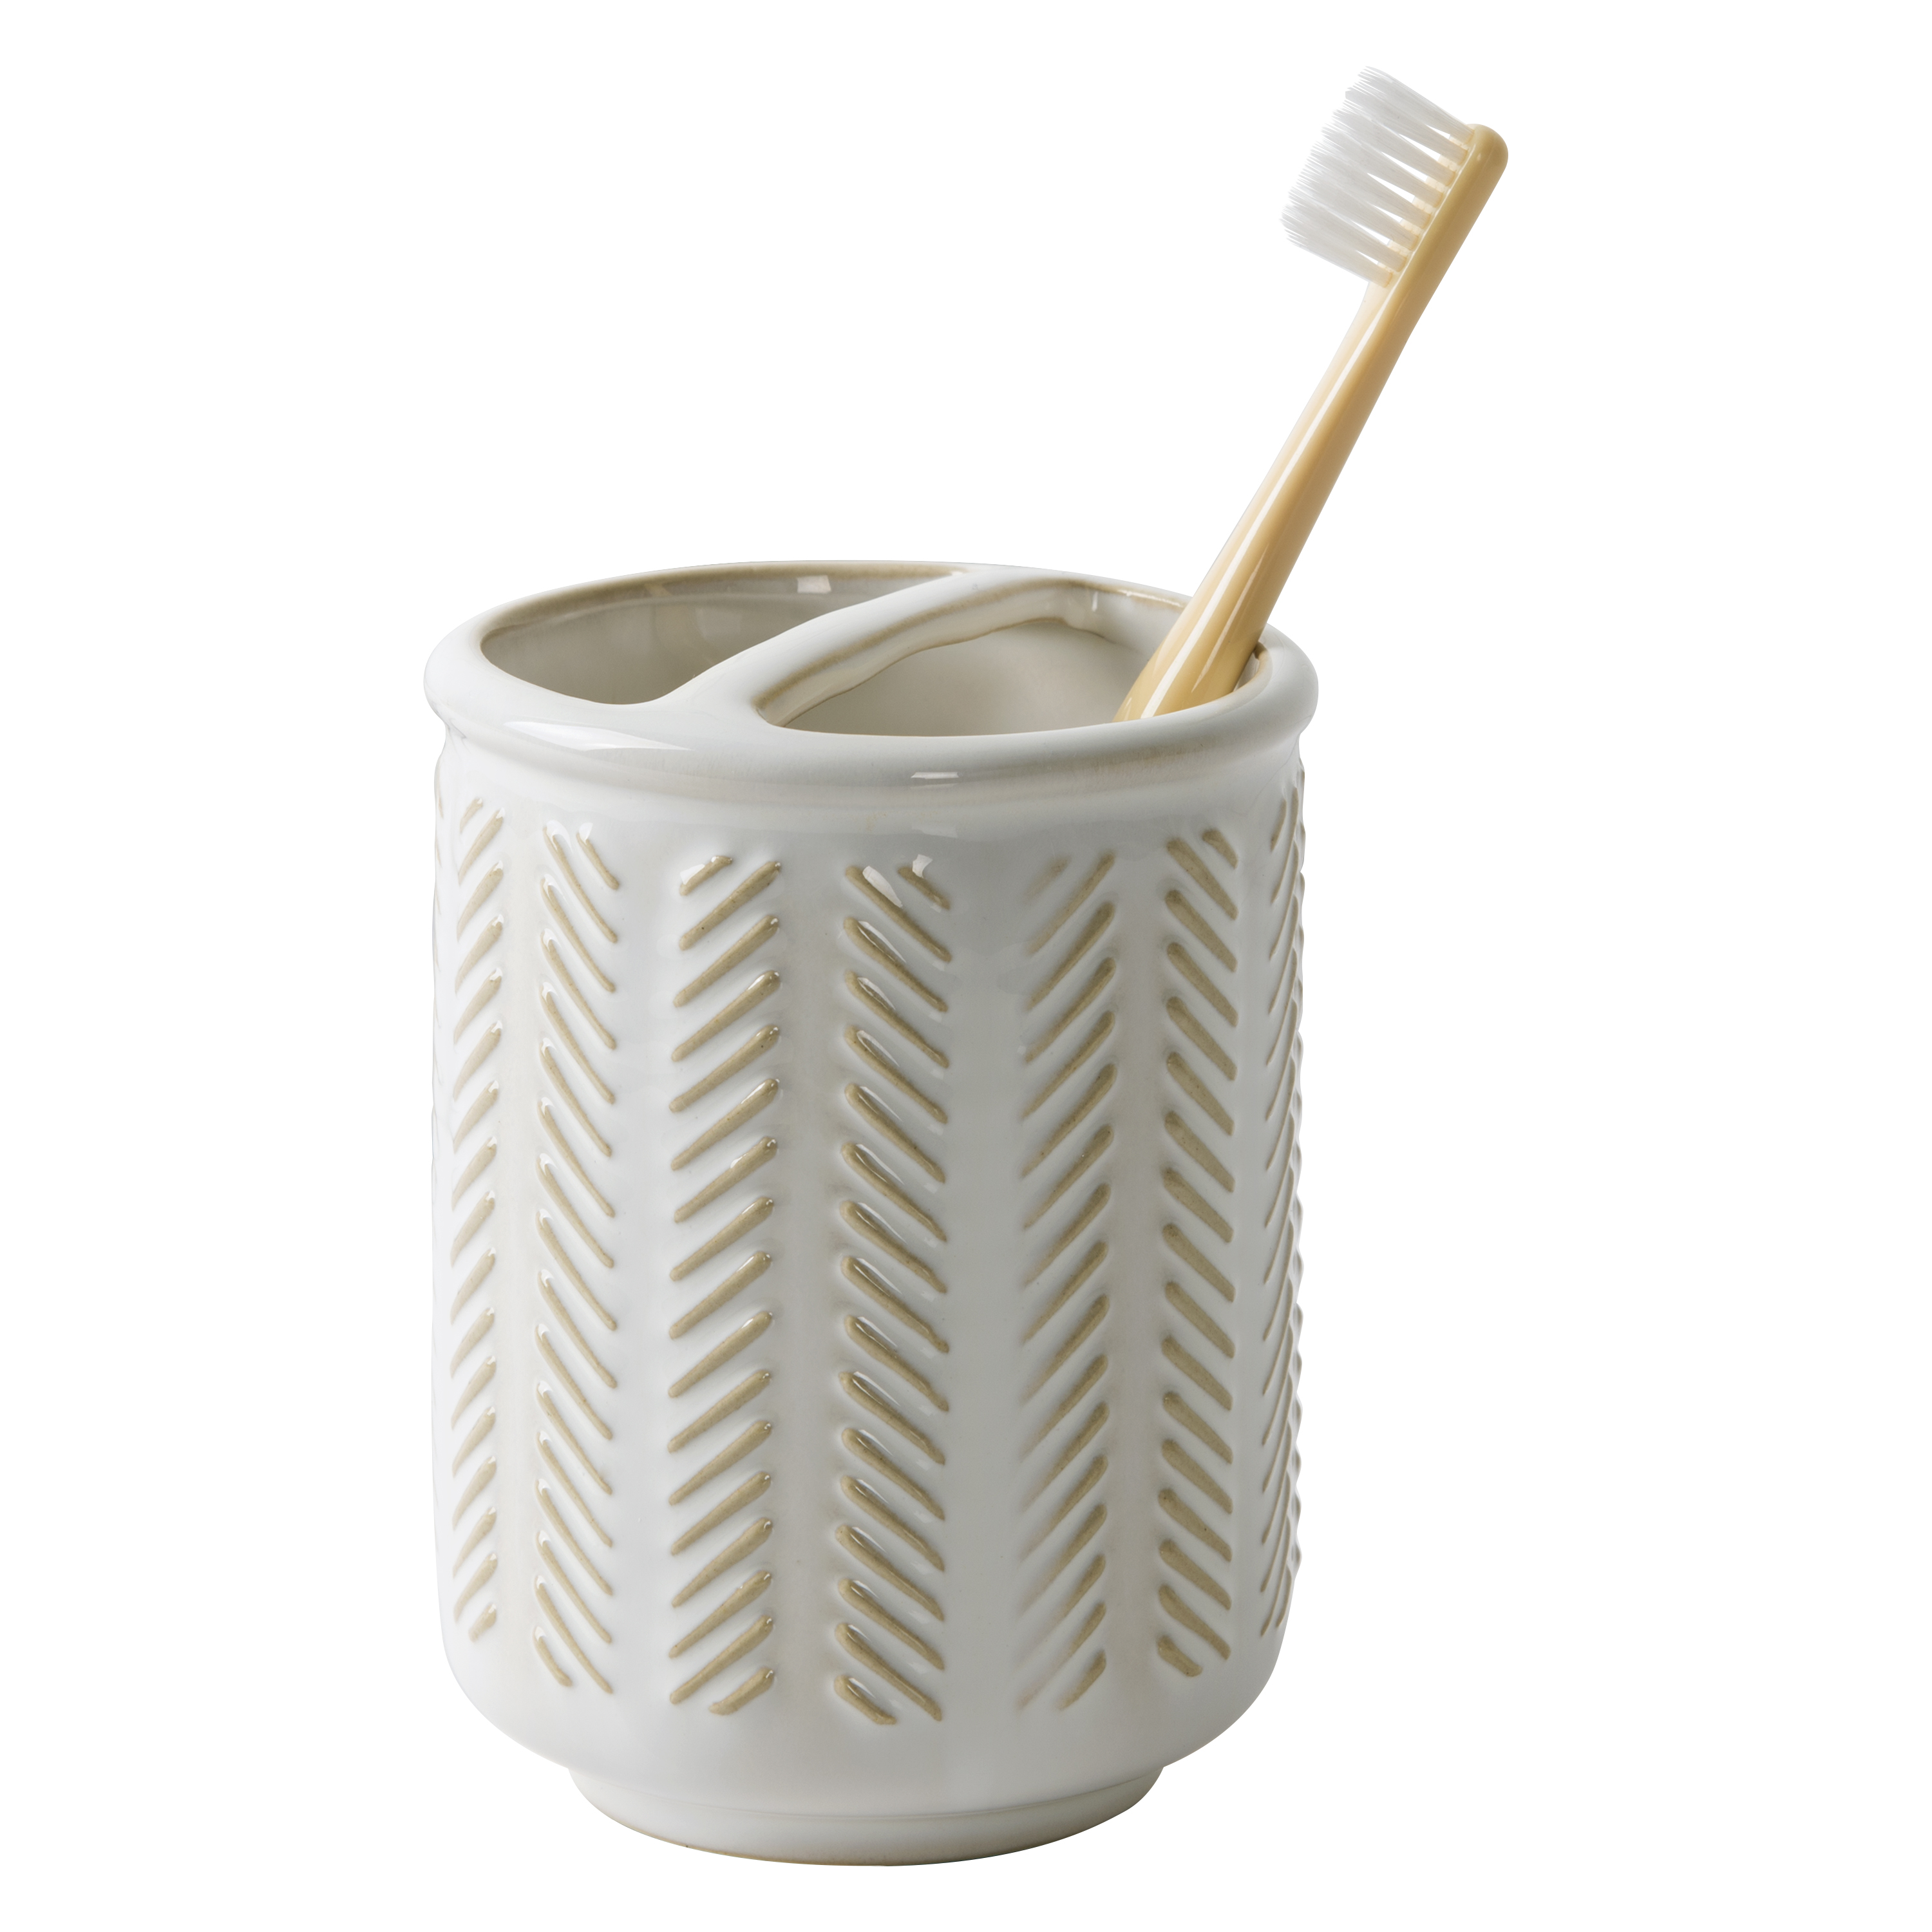 Better Homes & Gardens Reactive Glazed Textured Ceramic Toothbrush Holder in Creamy White - image 2 of 6